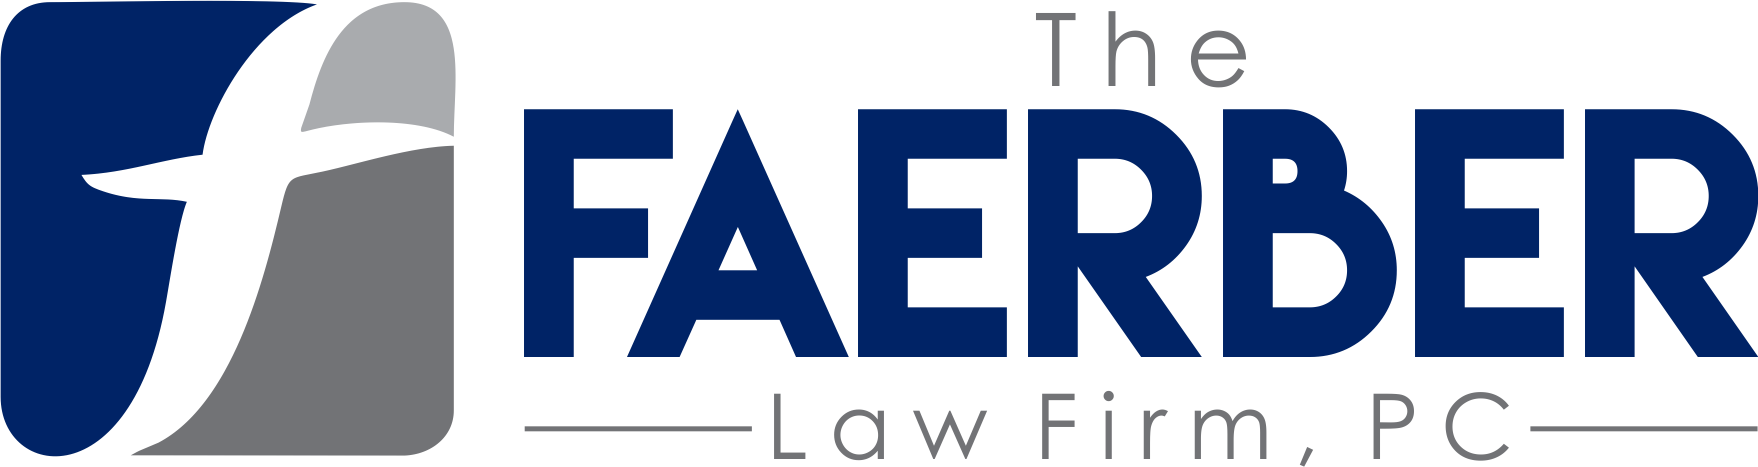 Faerber Law Firm